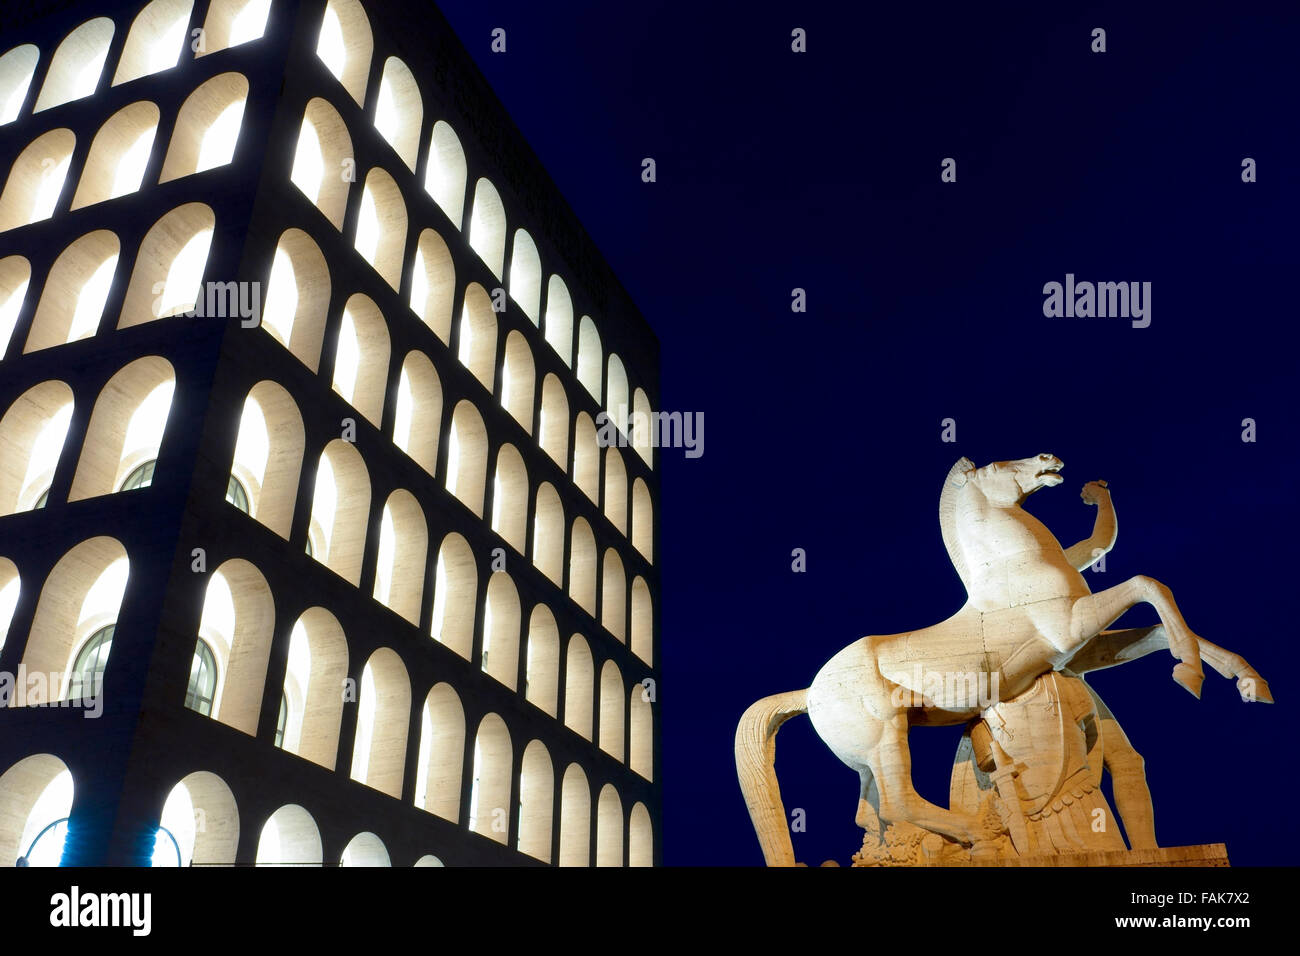 Newly restored Square Colosseum, Colosseo Quadrato, symbol of fascist architecture, by night. Currently Fendi Company headquarter. EUR, Rome, Italy EU Stock Photo